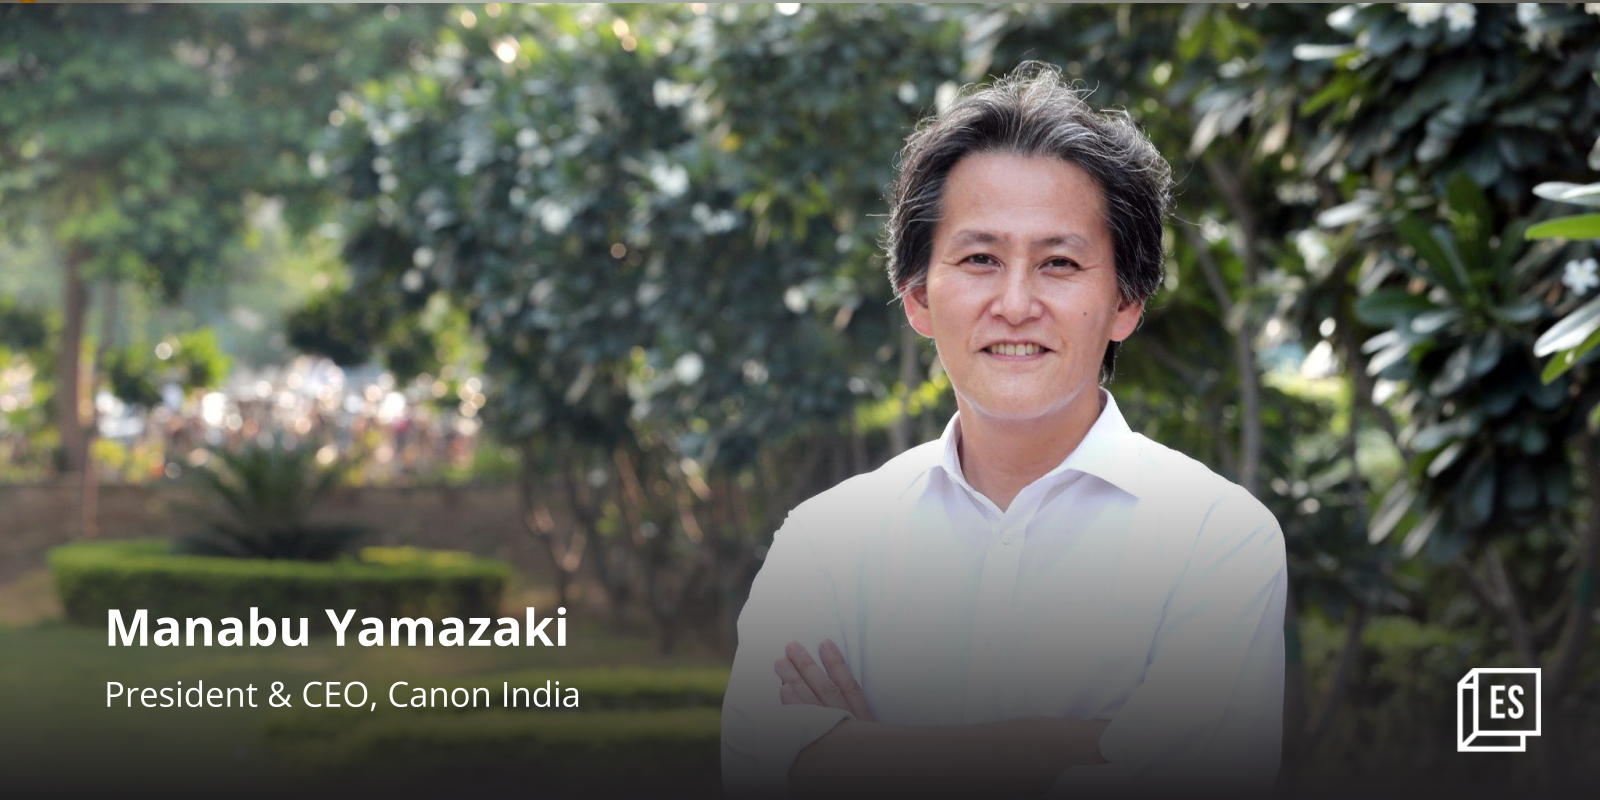 India is a frontier market for Canon, says India CEO Manabu Yamazaki

